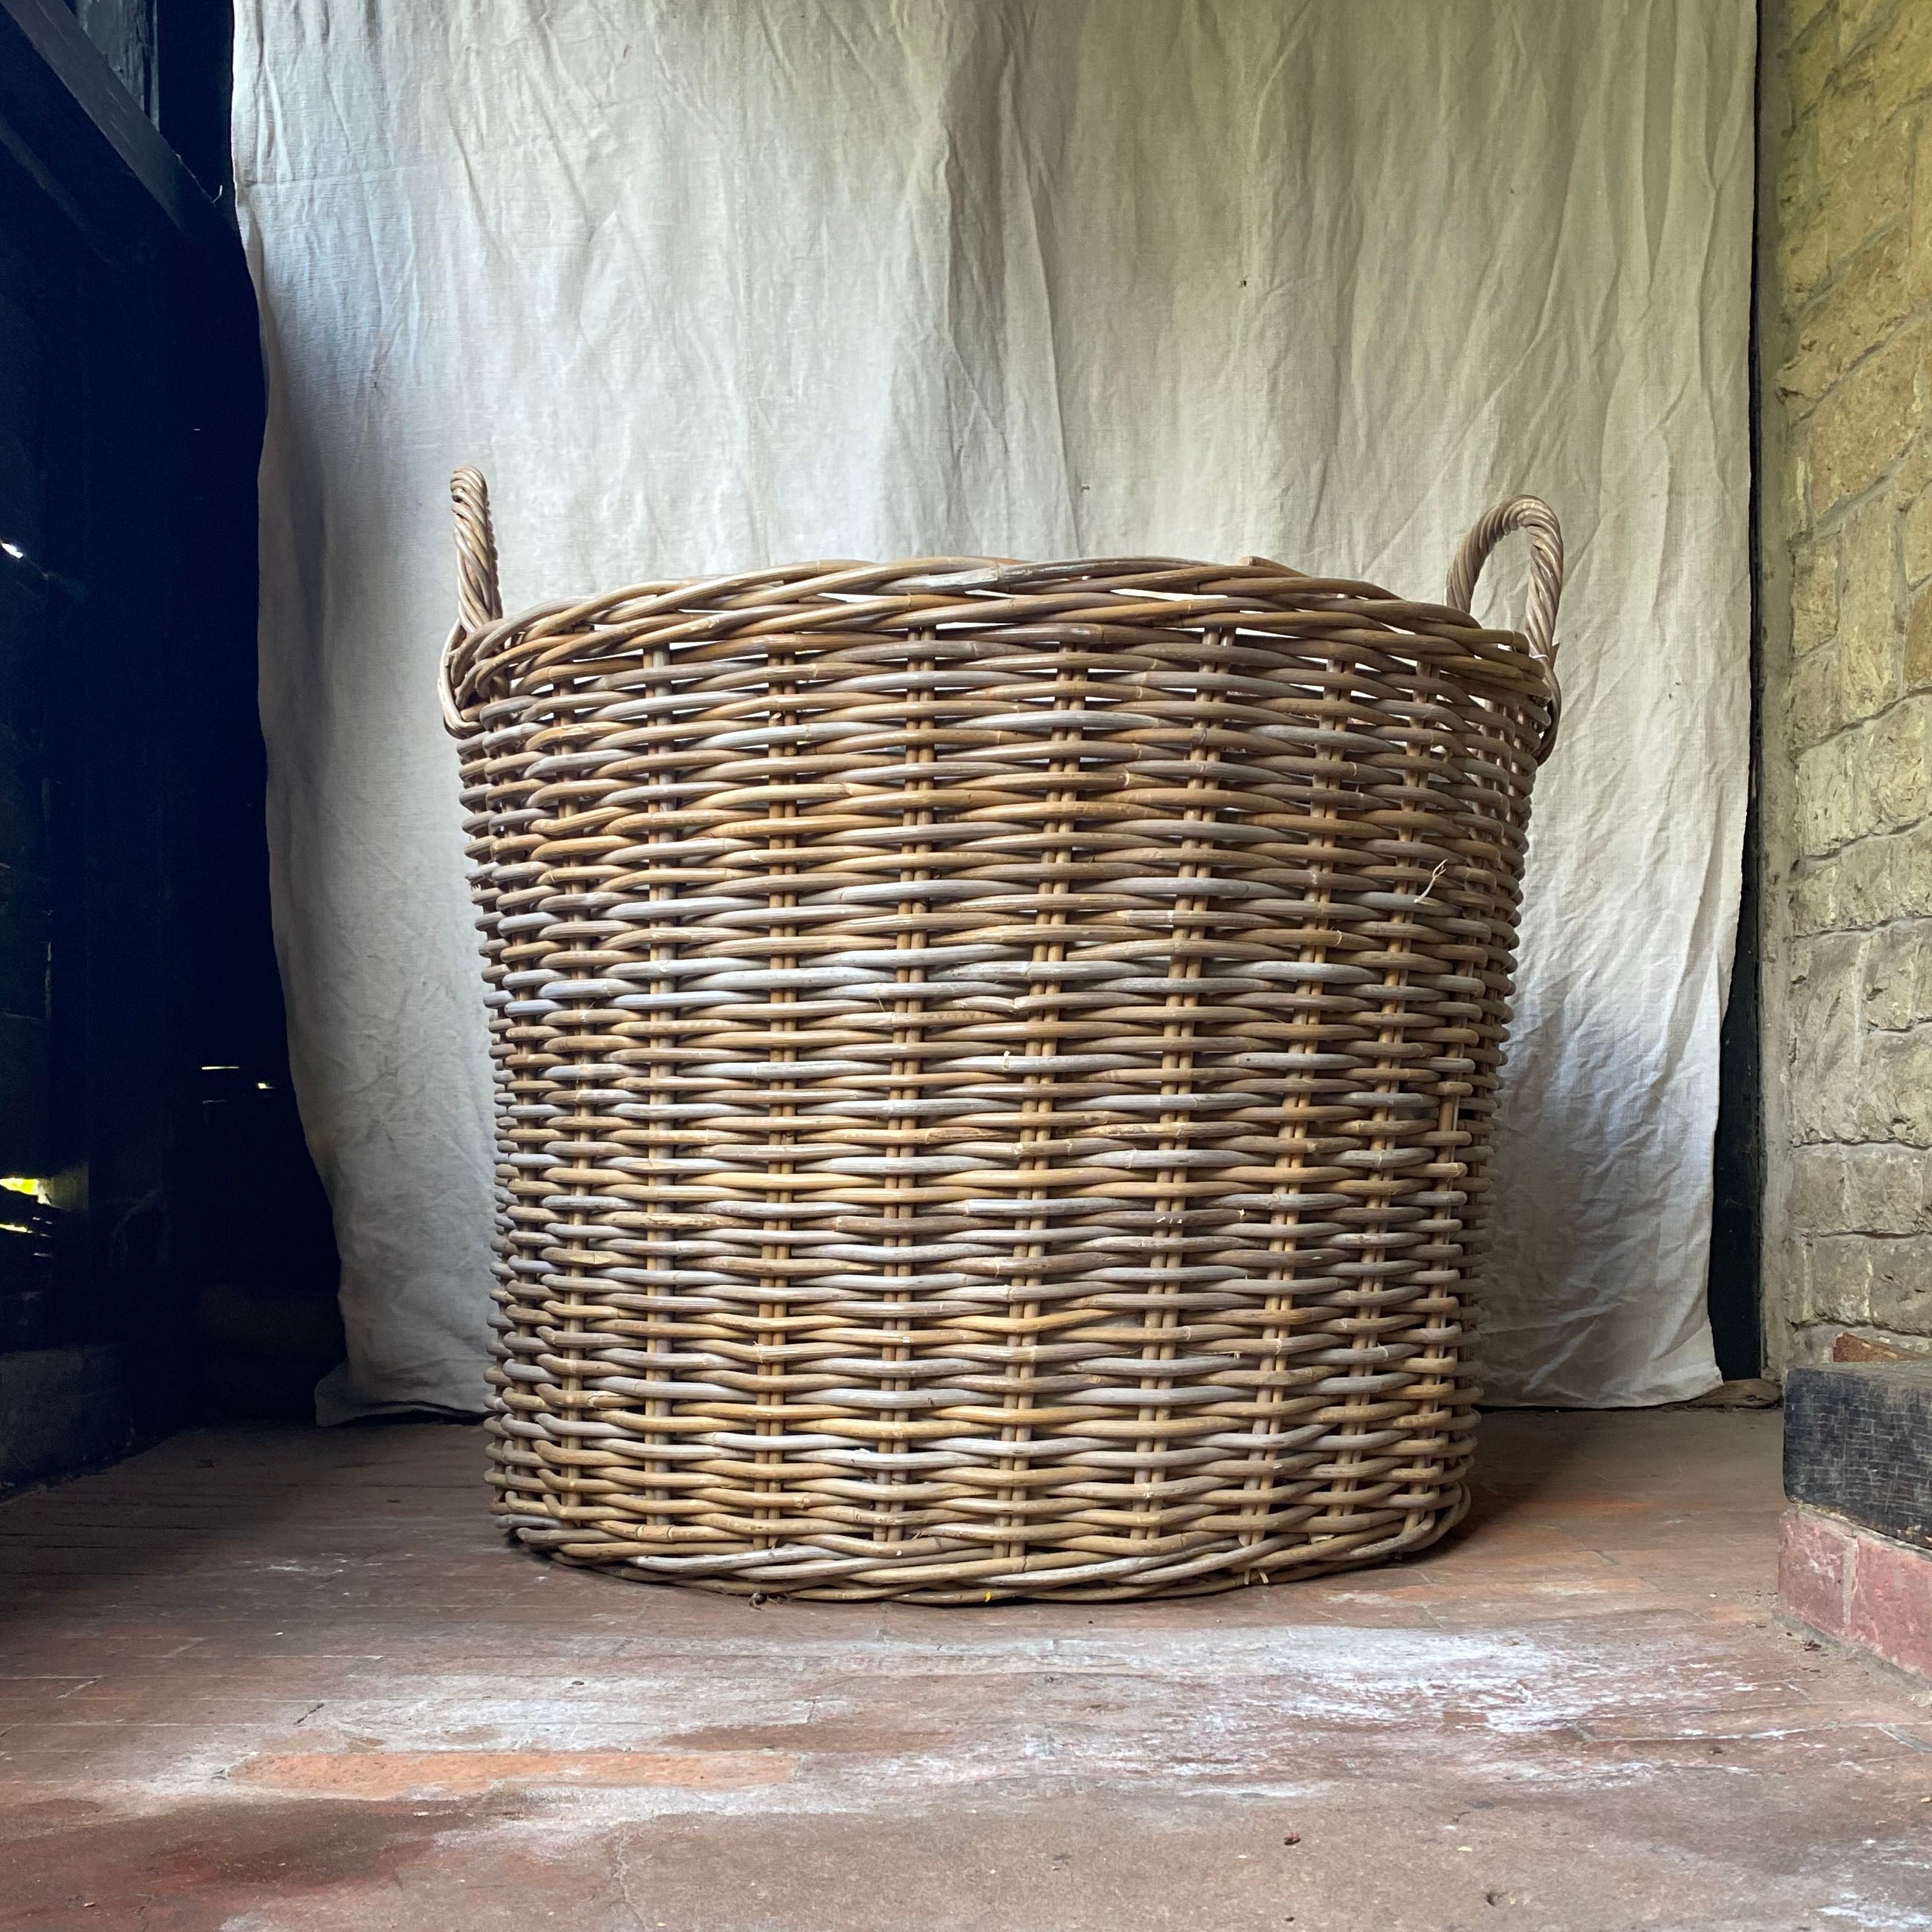 Enormous Wicker Basket